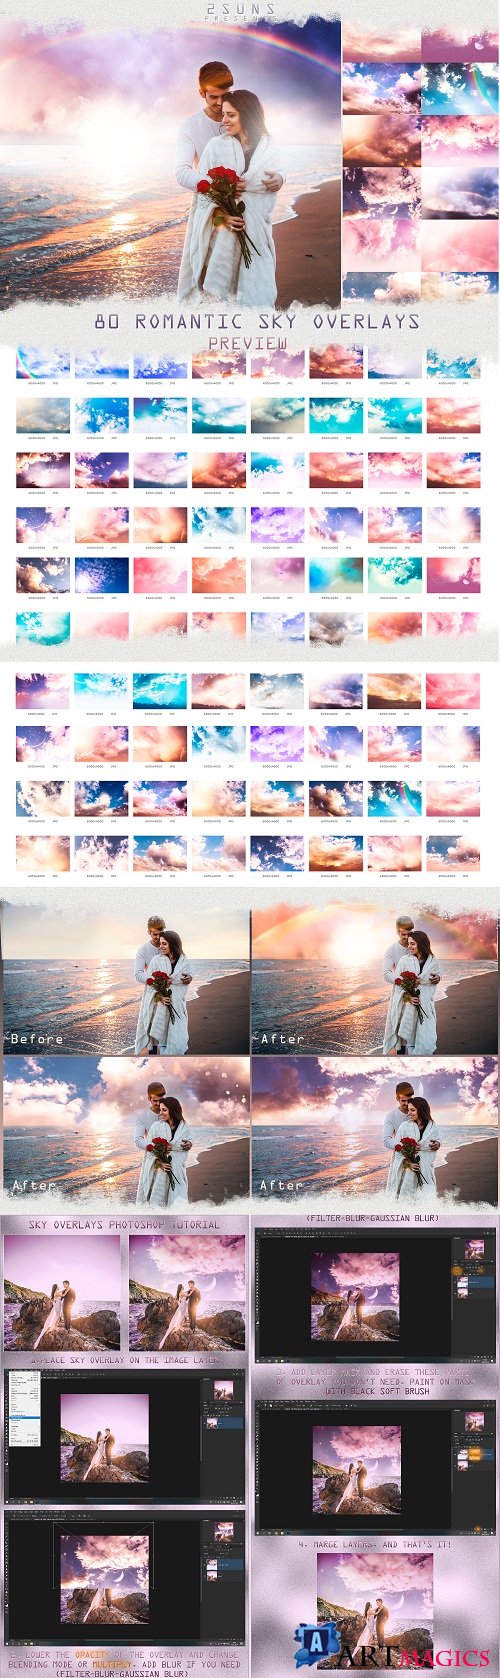 80 Romantic Sky Overlays, Pastel sky, sky overlay textures 256194